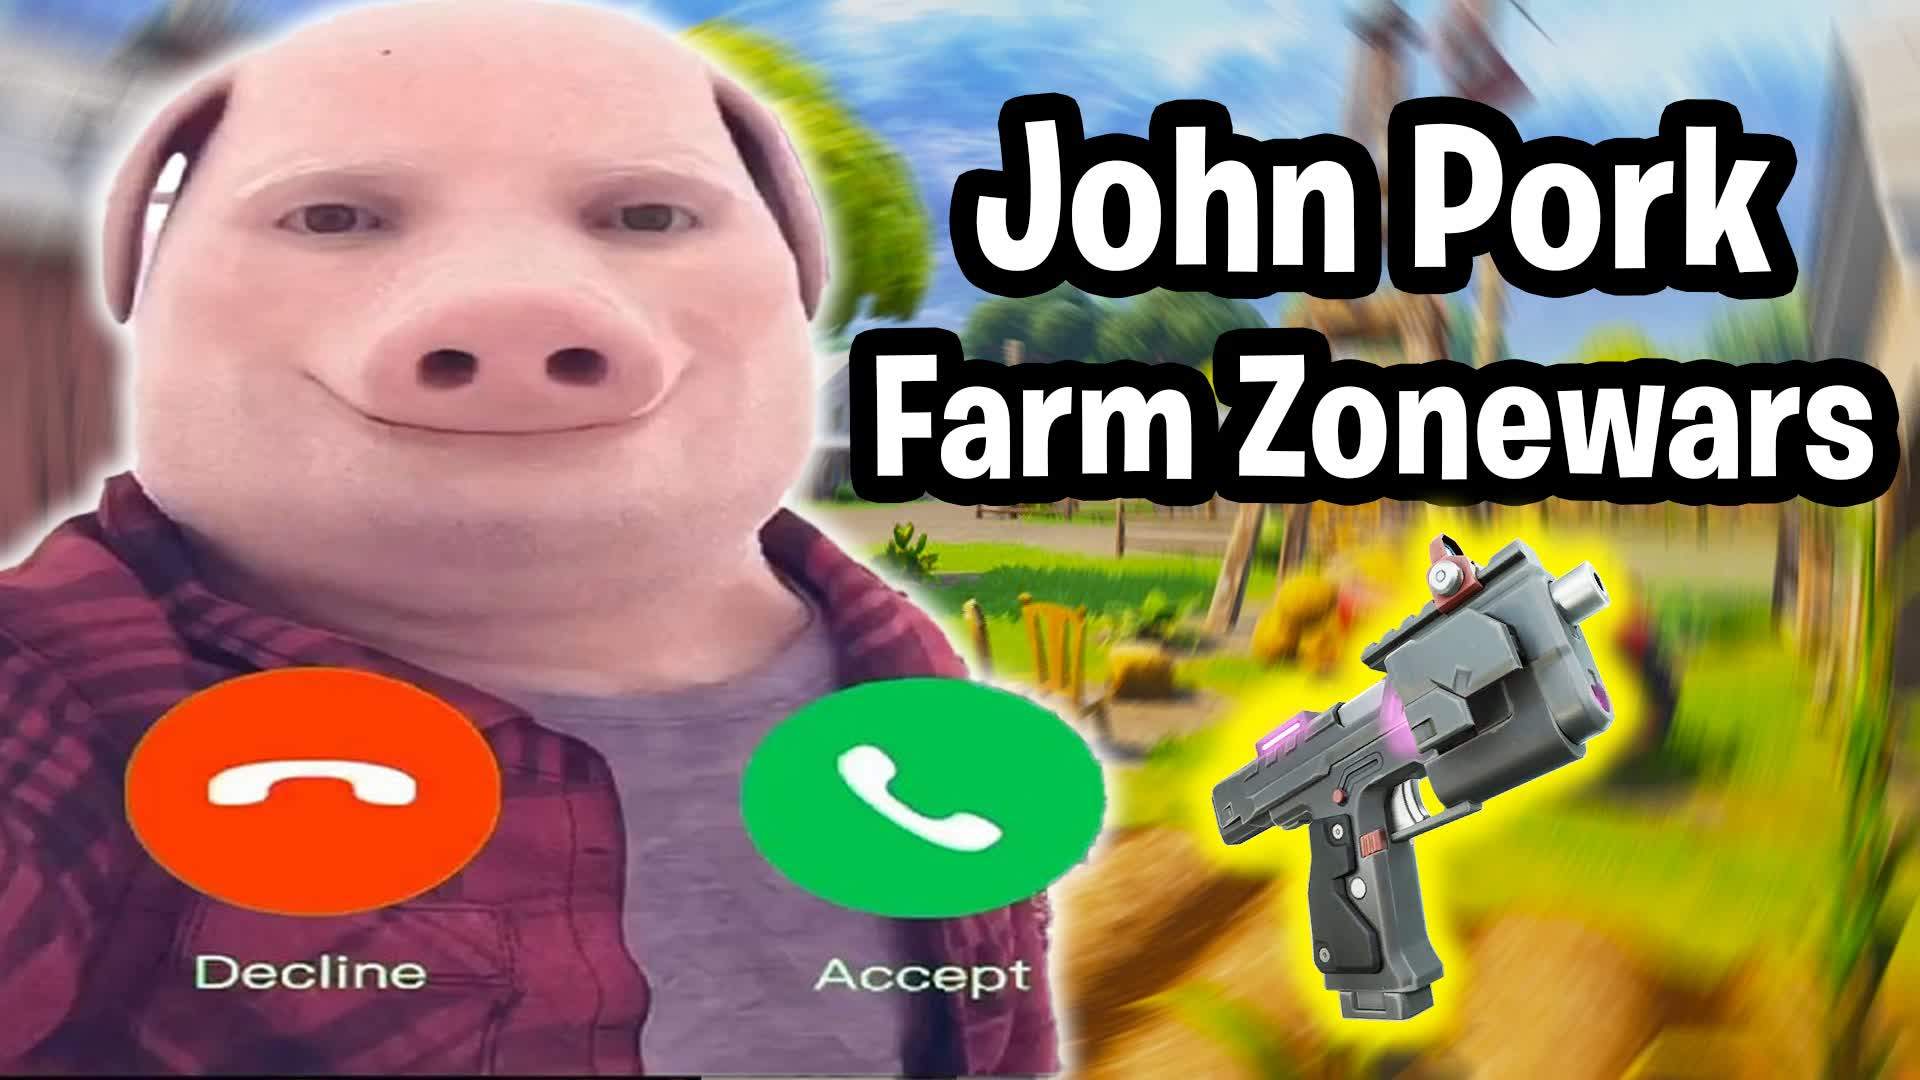 John Pork Farm Zonewars.